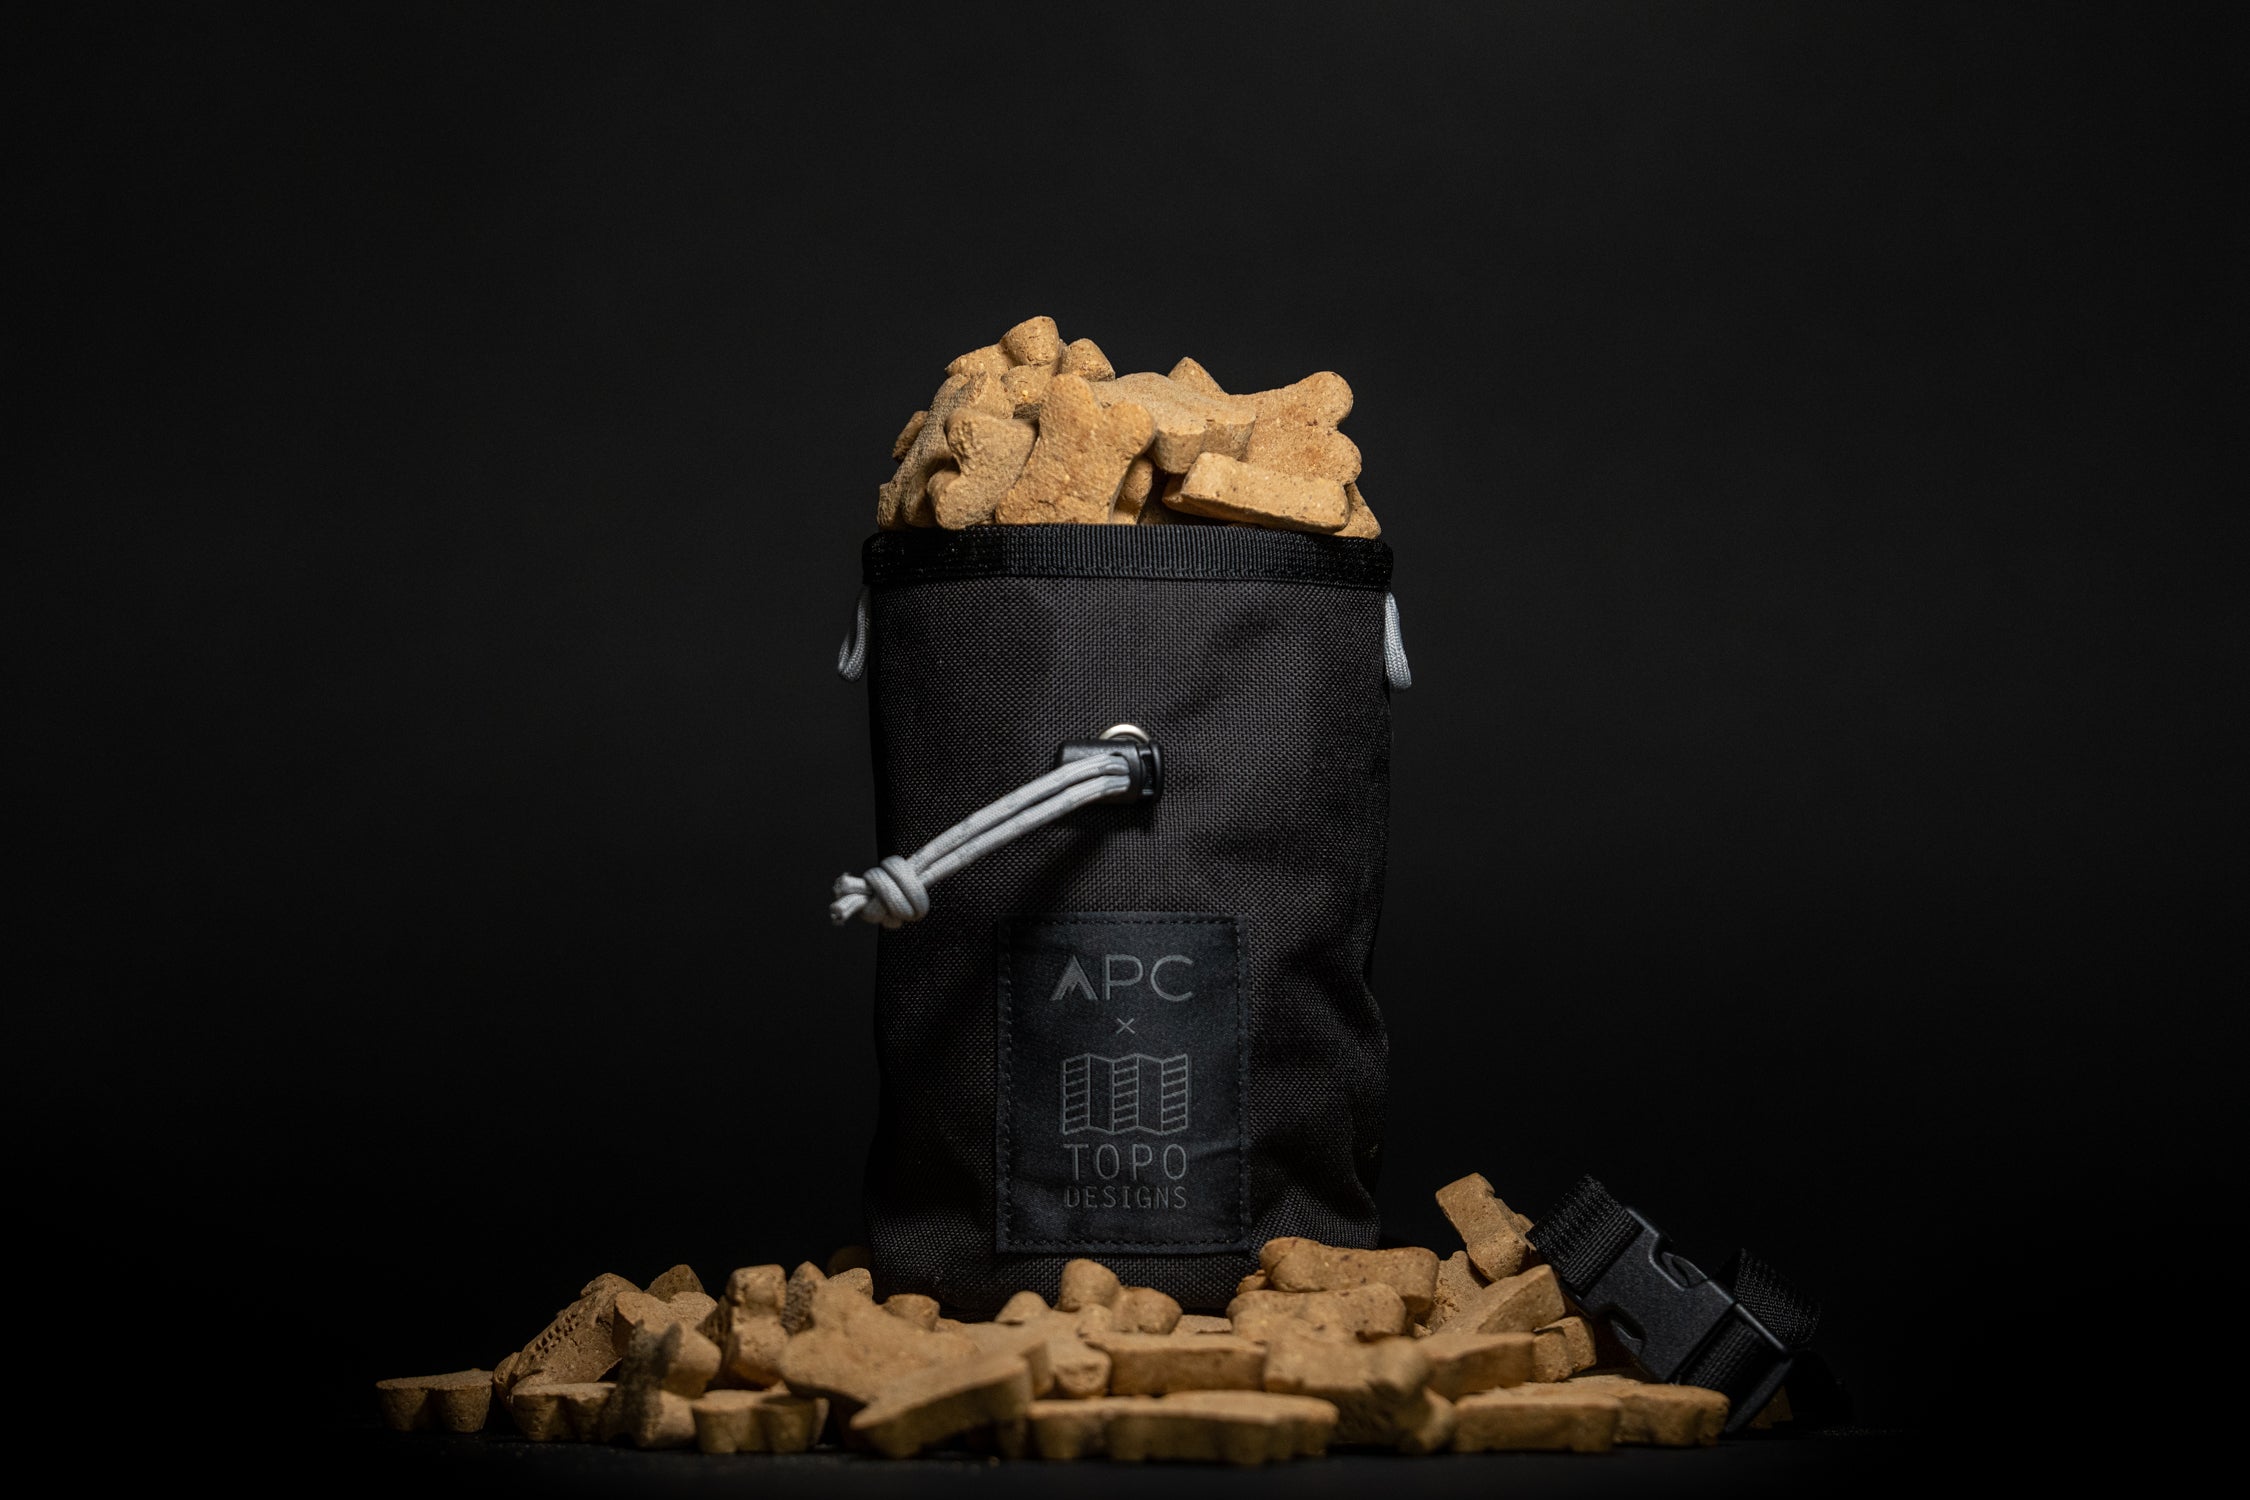 Topo designs X APC treat bag for training active dogs 